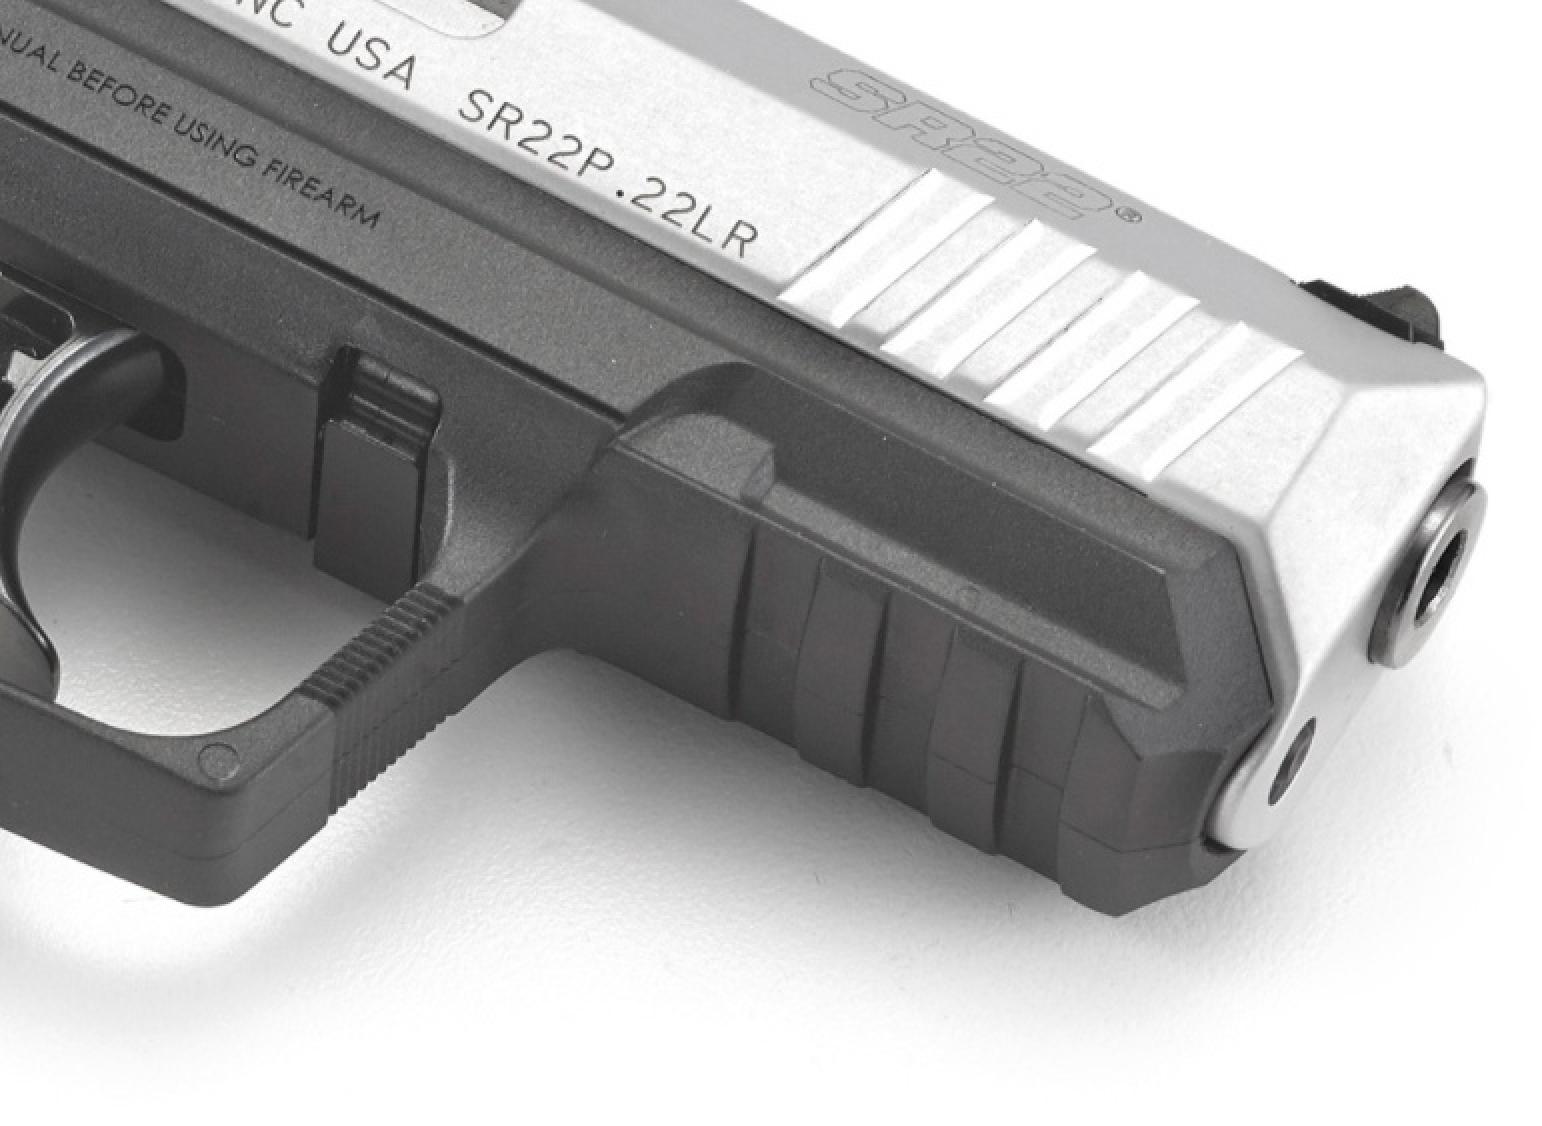 Ruger SR22 22 LR Semi-Auto Pistol